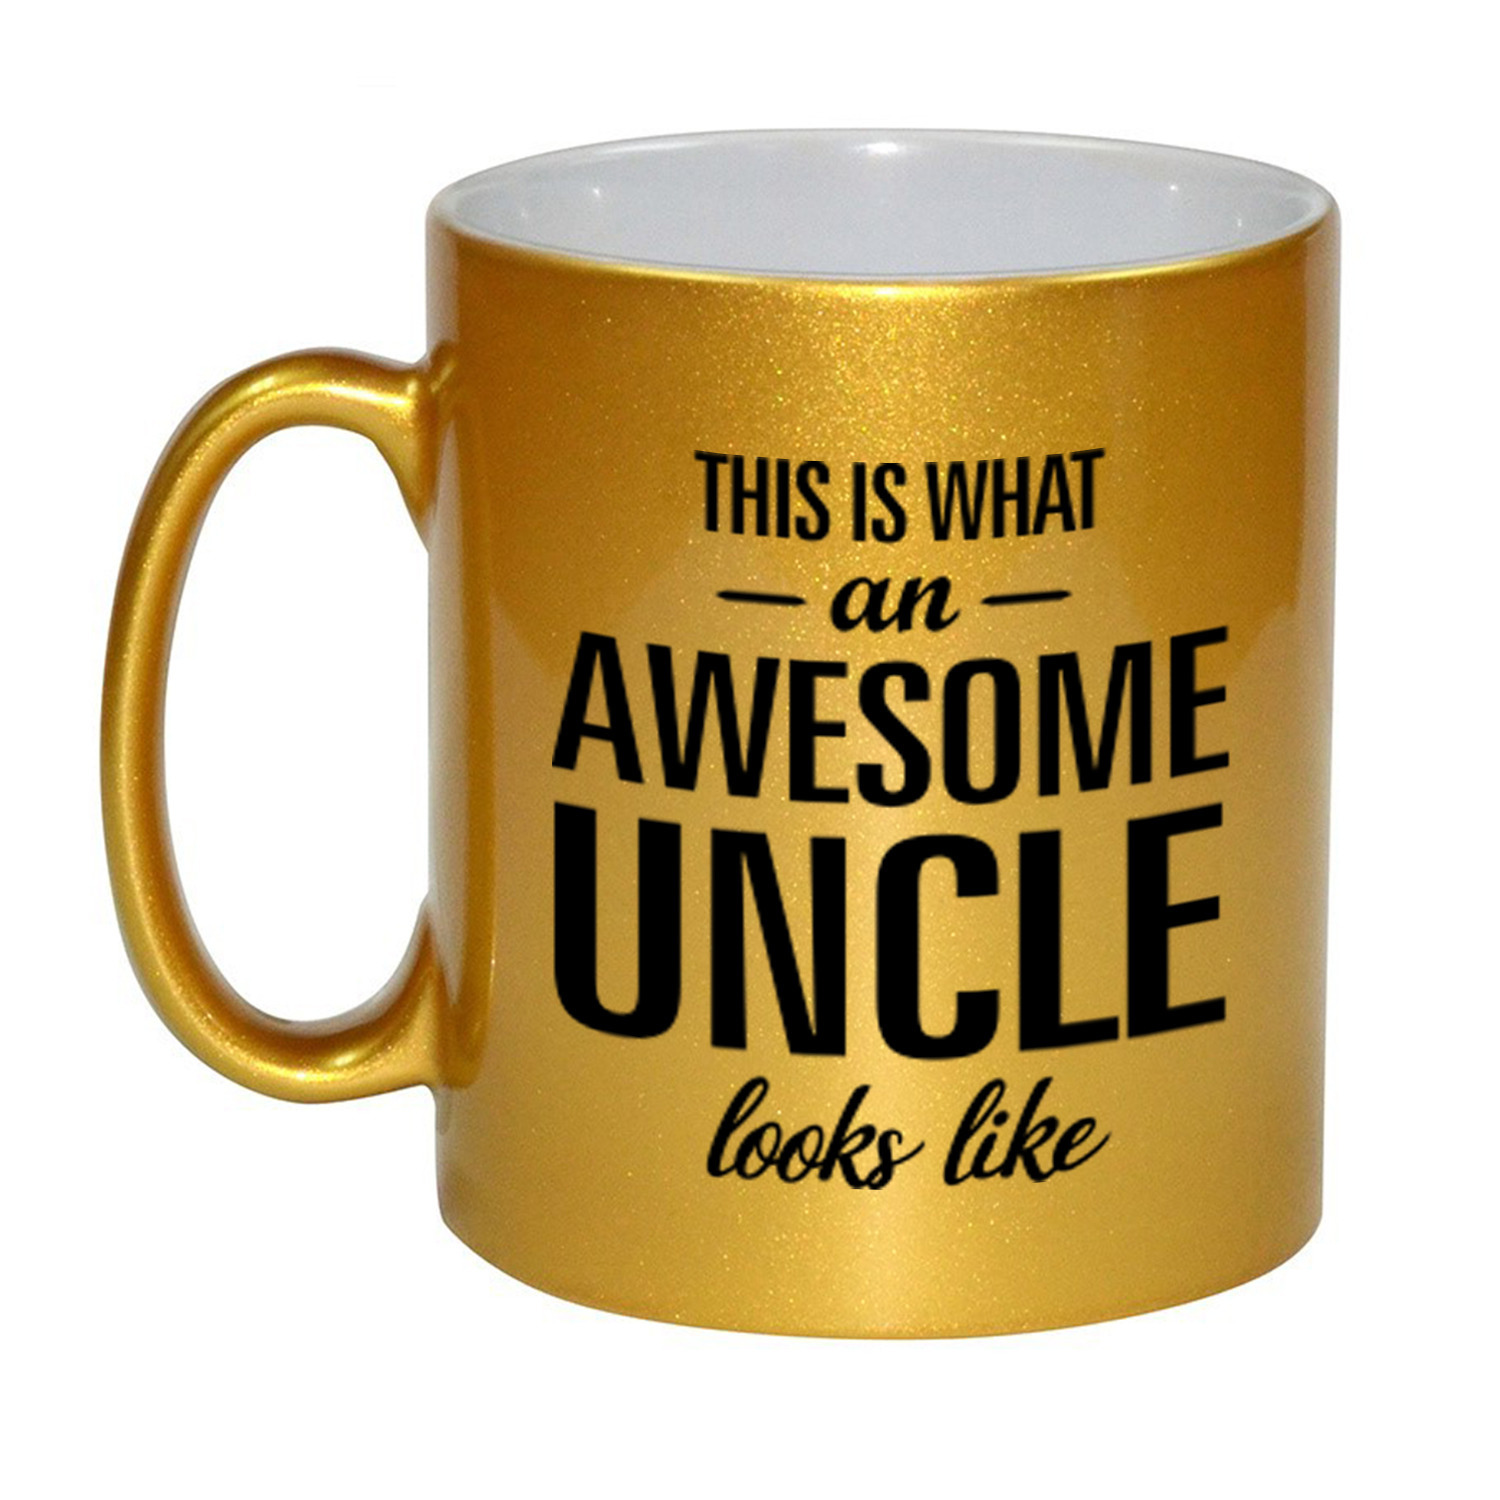 Awesome uncle / oom gouden cadeau mok / beker 330 ml